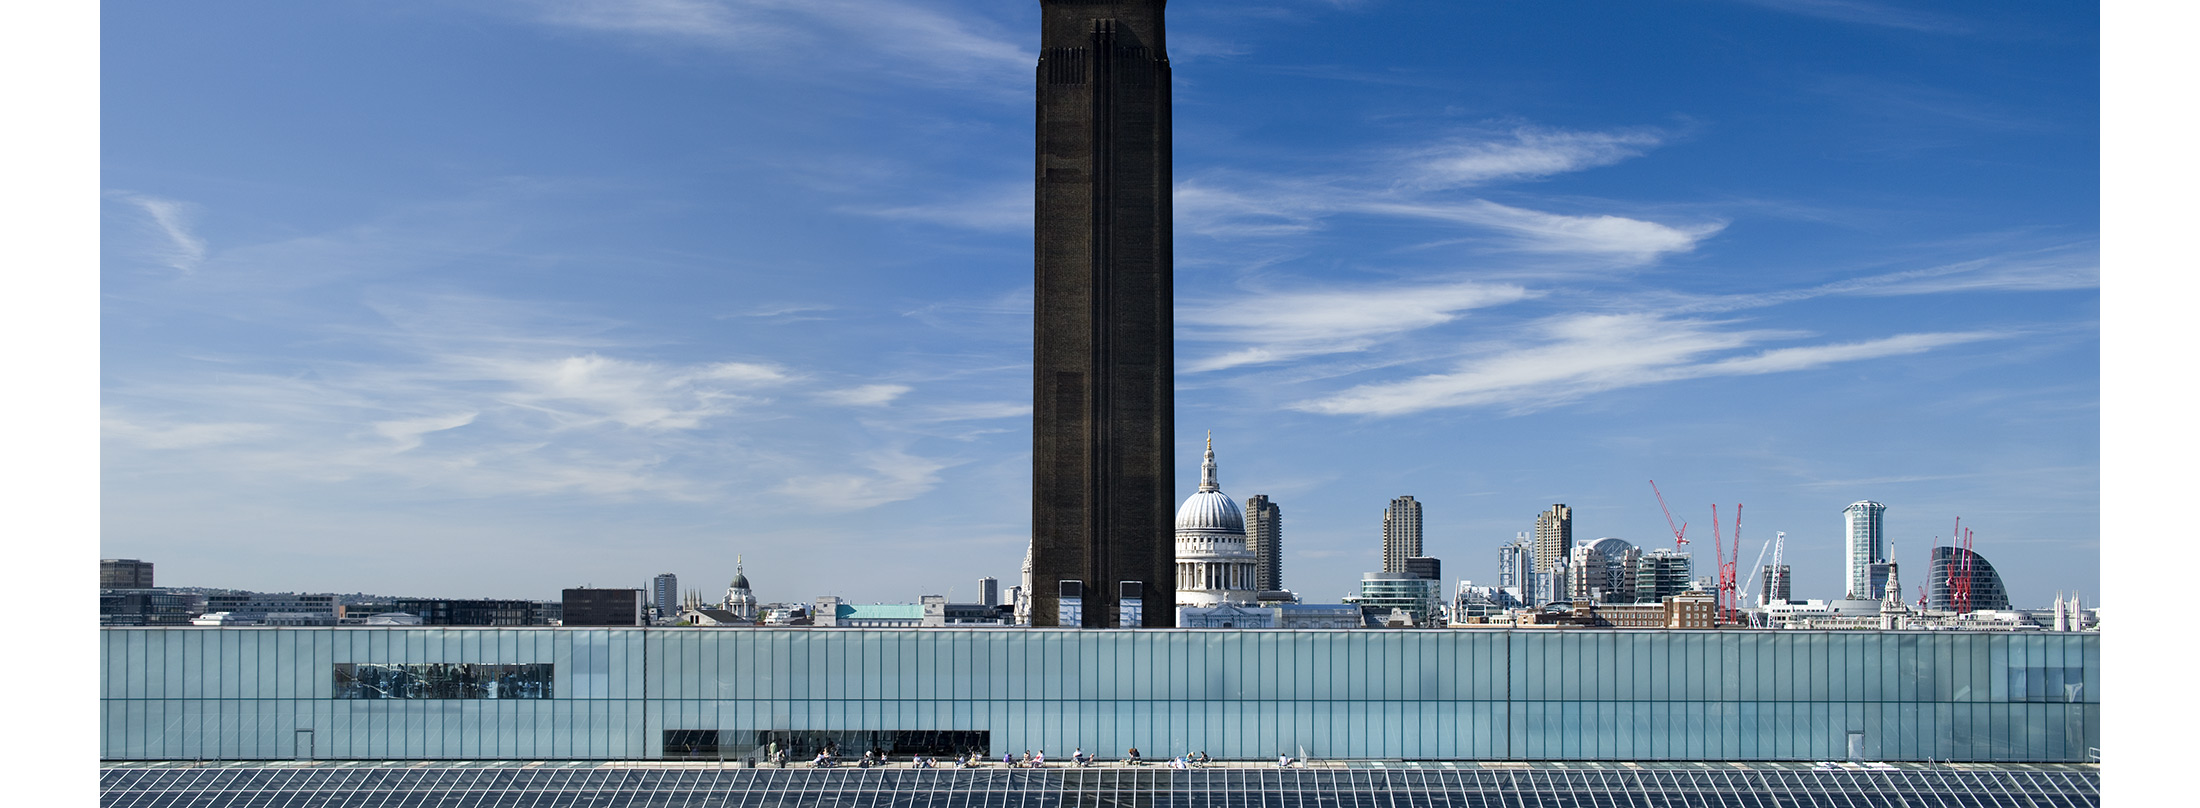 Tate Modern London